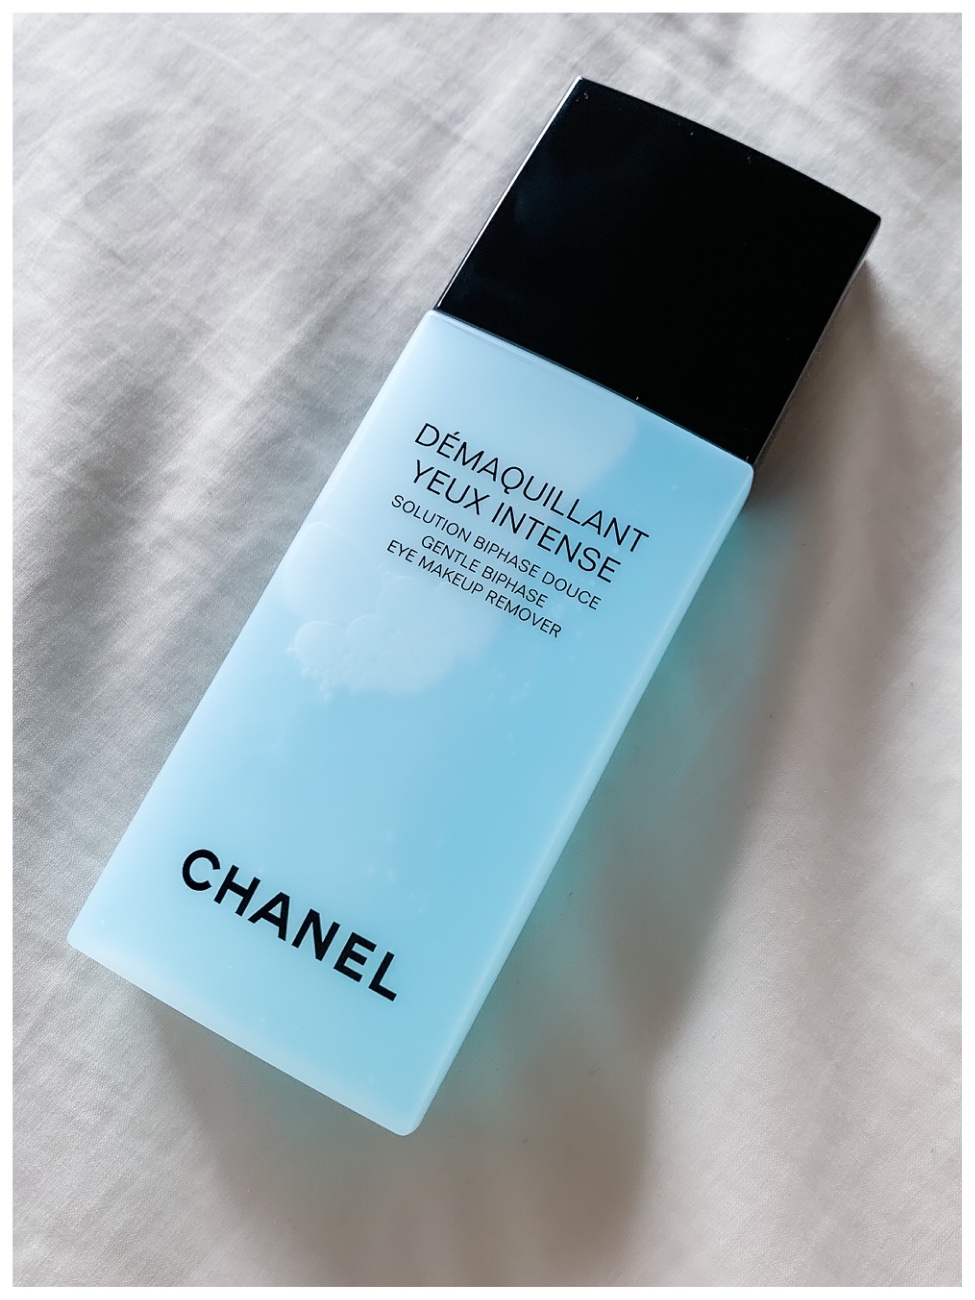 Chanel Demaquillant Yeux Intense Gentle Bi-phase Eye Makeup Remover